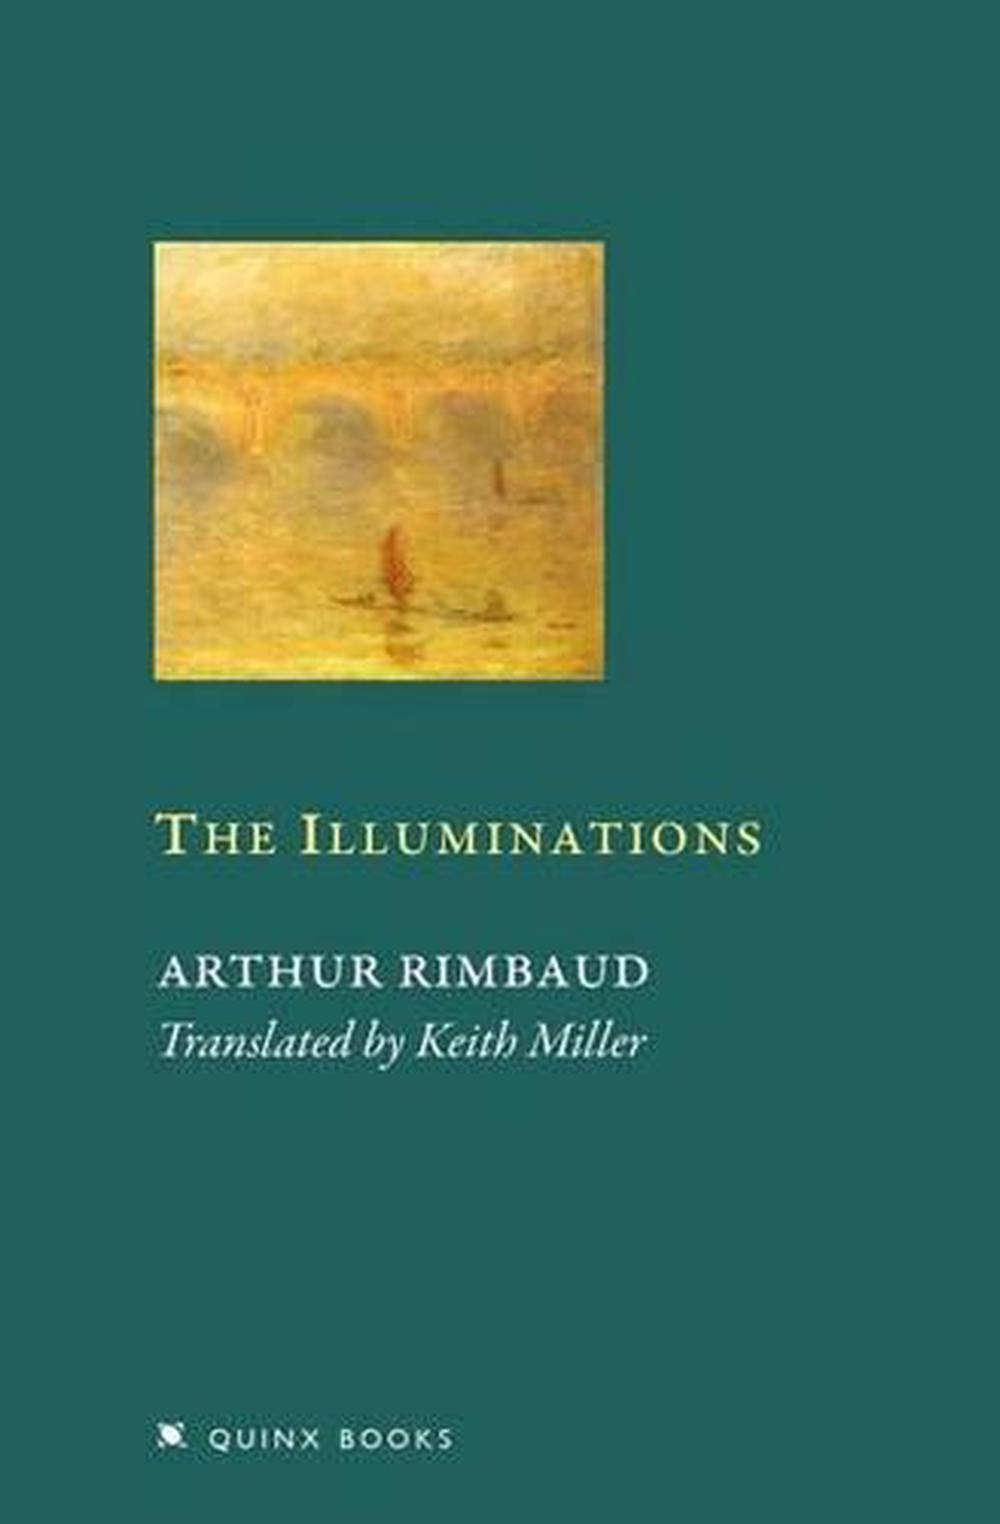 The Illuminations by Arthur Rimbaud (English) Paperback Book Free ...